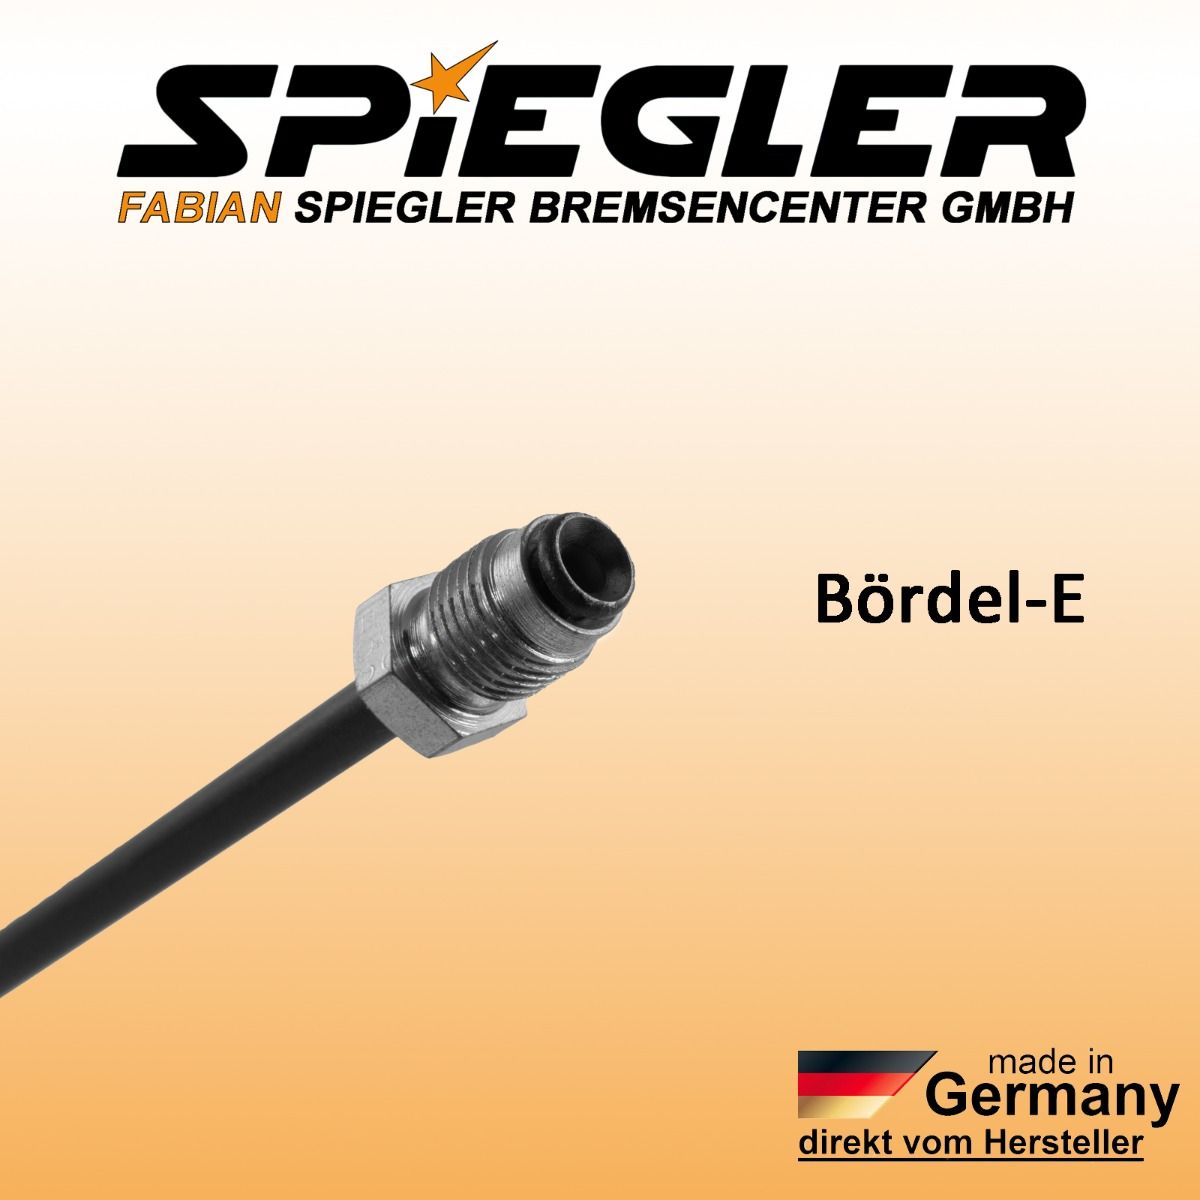 Bremsrohr Bördel E (6 ⌀) - Fabian Spiegler KFZ-Leitungen GmbH